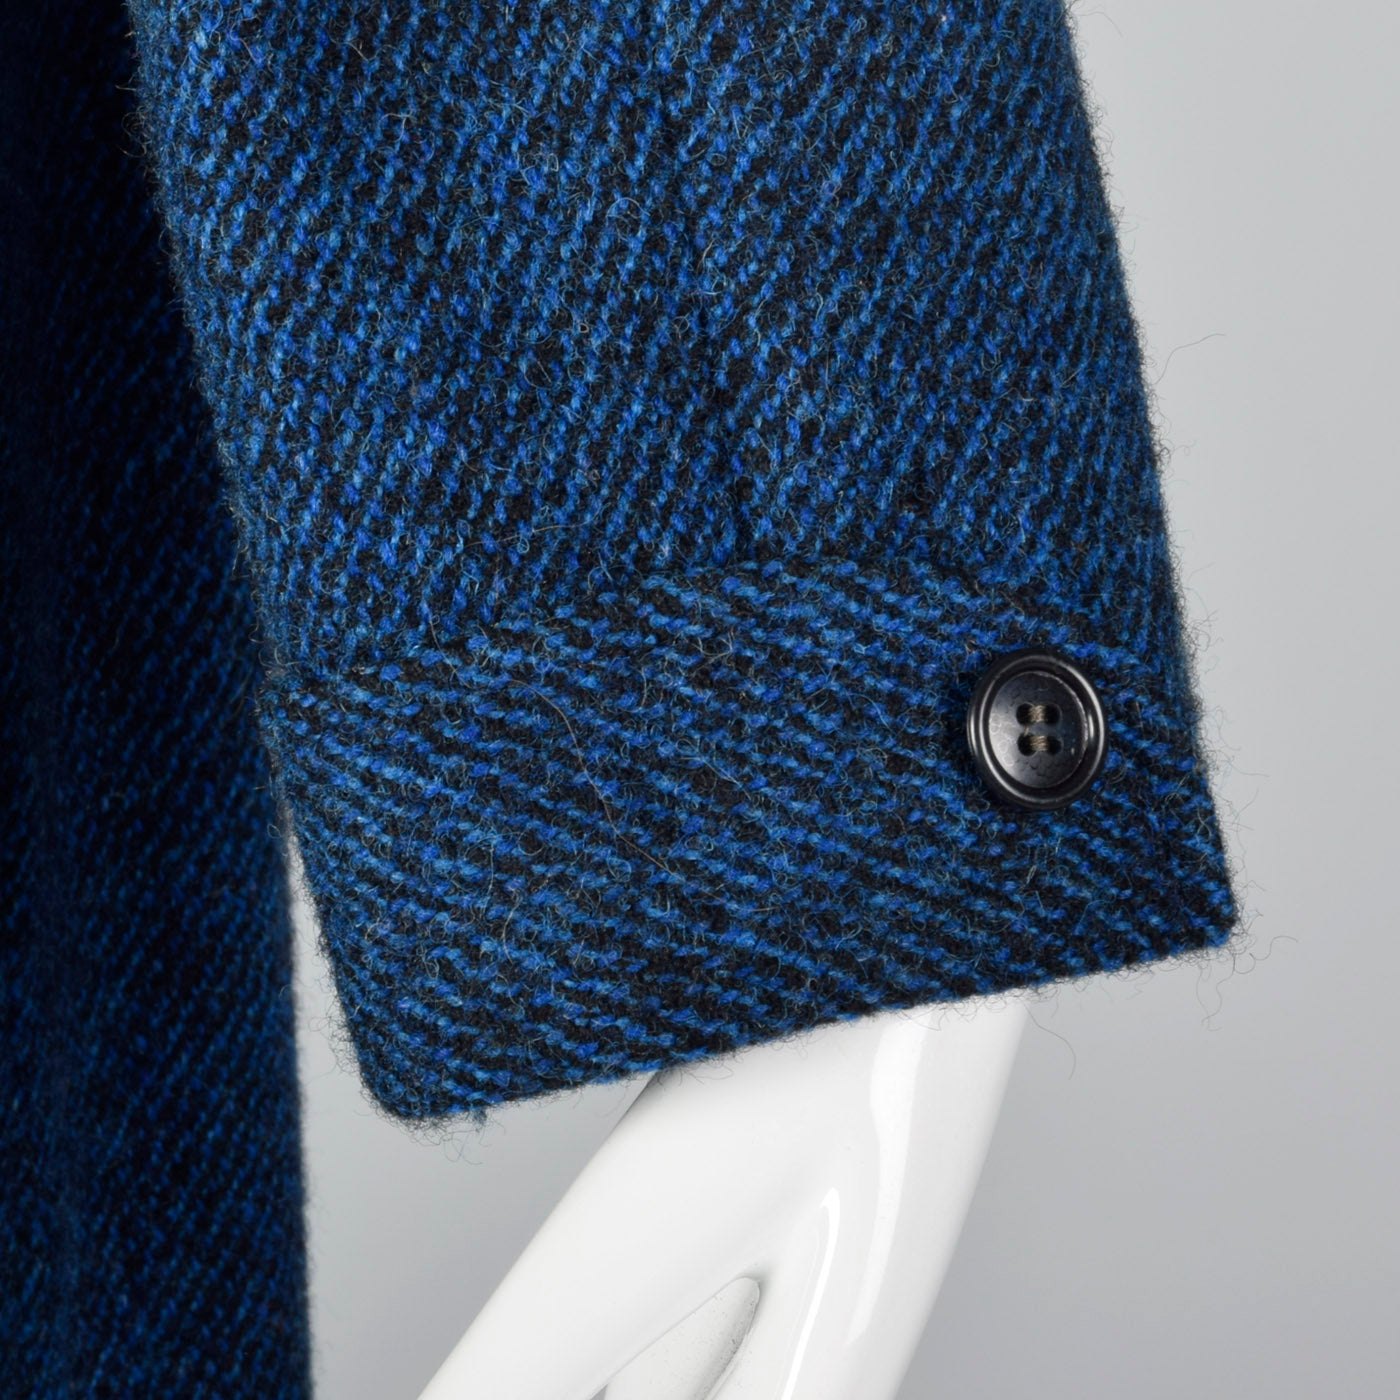 1950s Blue and Black Tweed Coat